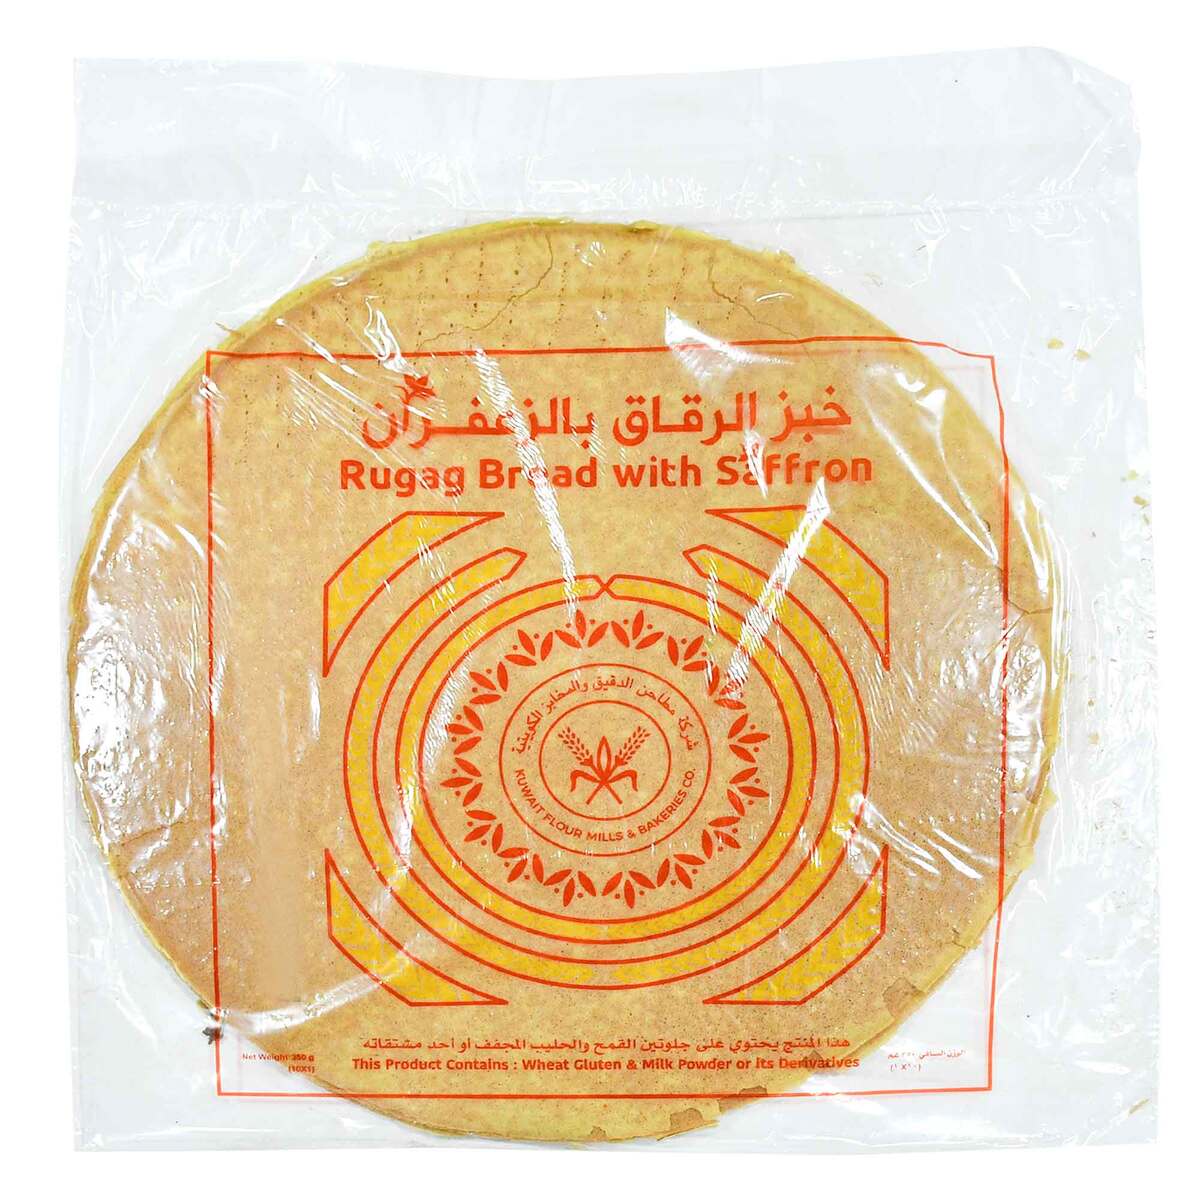 KFMBC Rugag Bread with Saffron 350 g